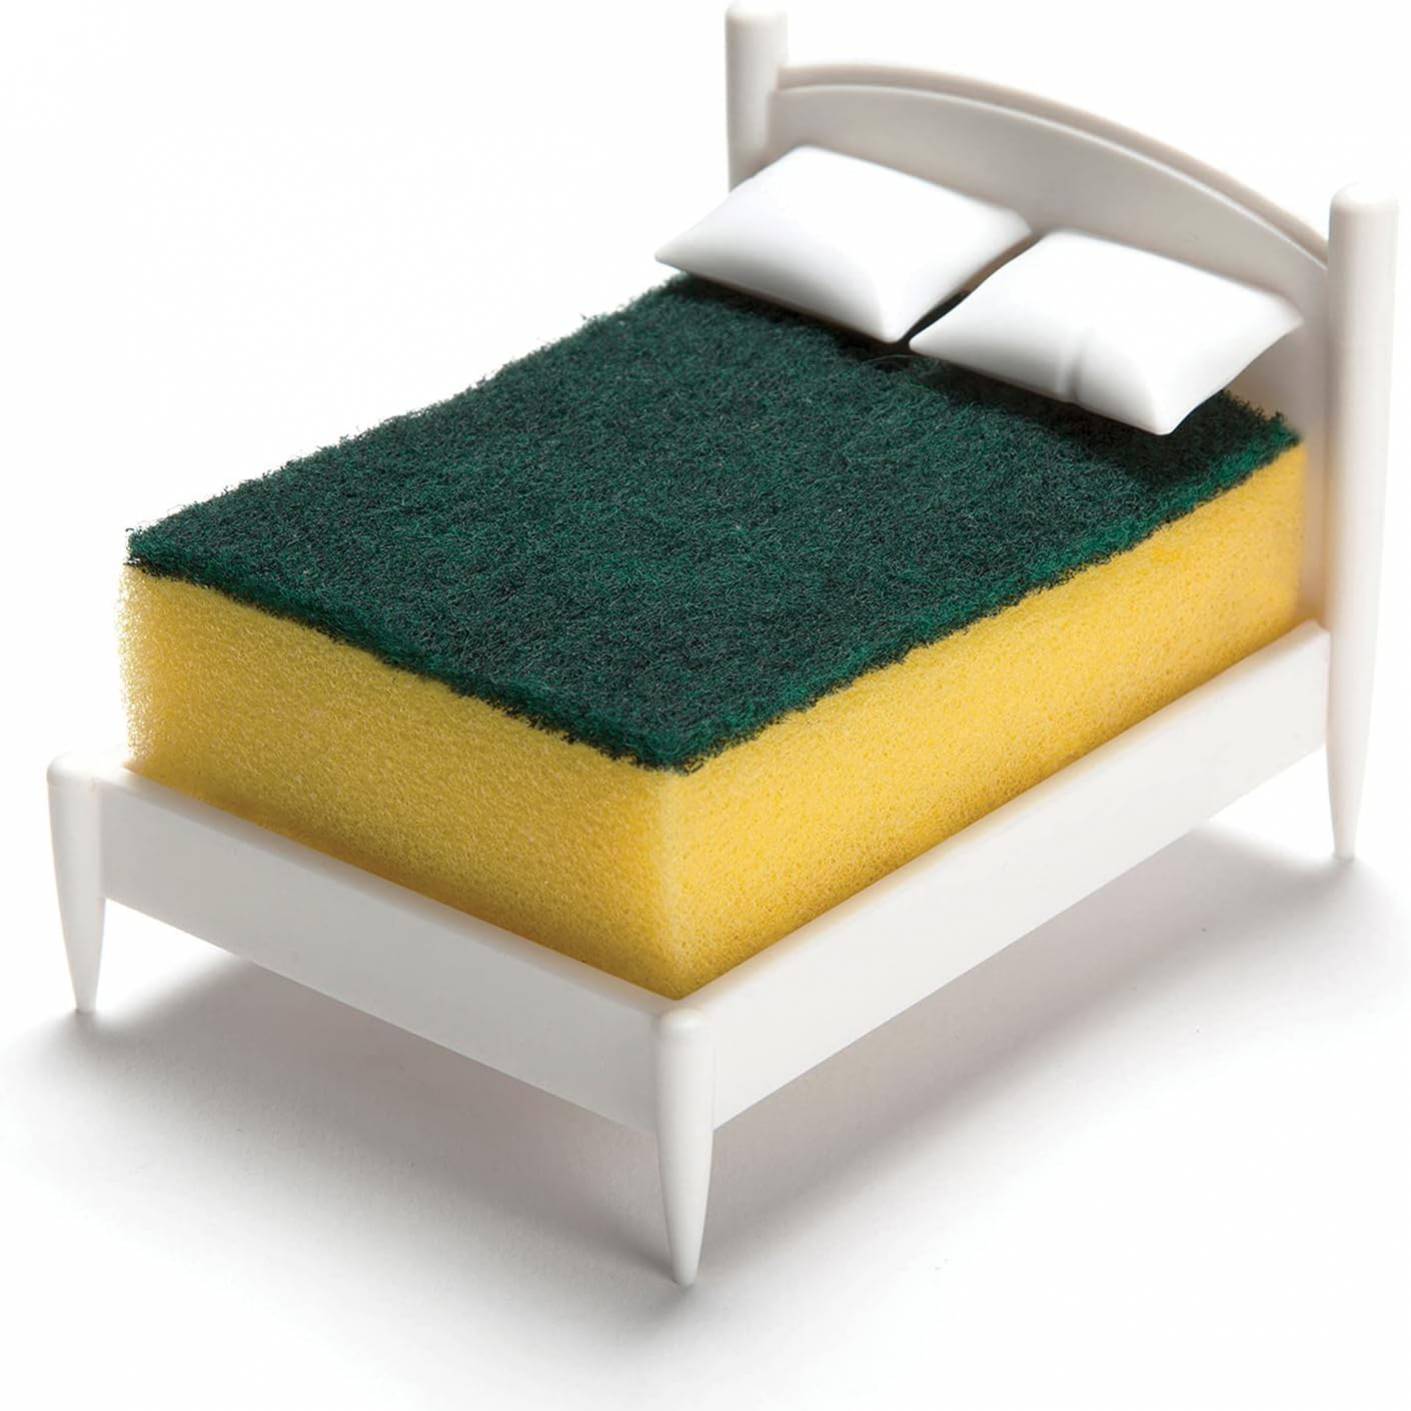 Sponge Bed Holder